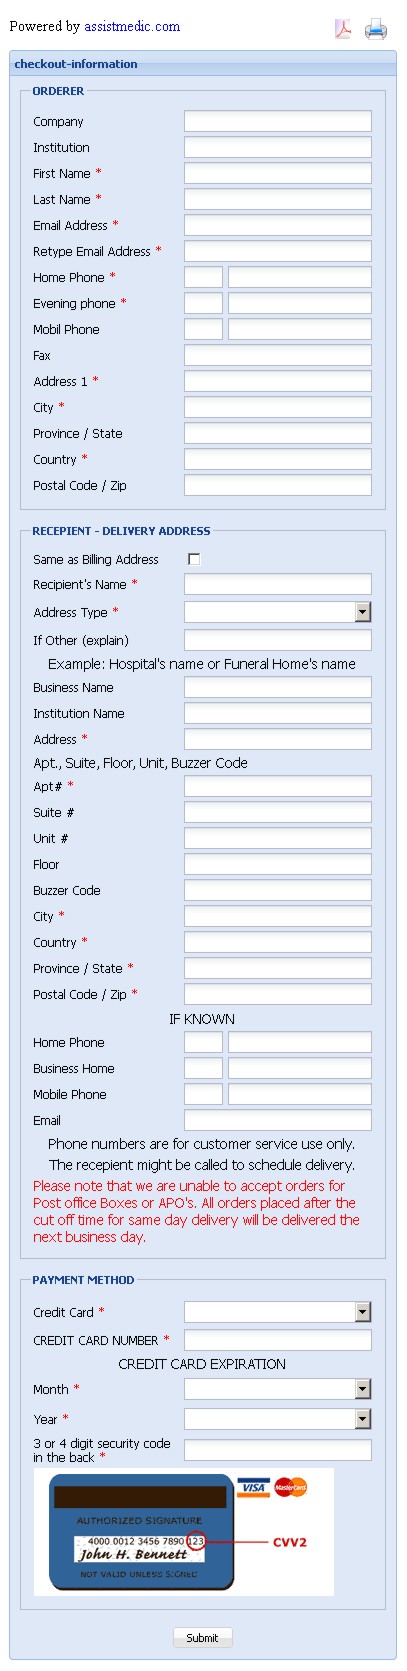 Ordering Information Form